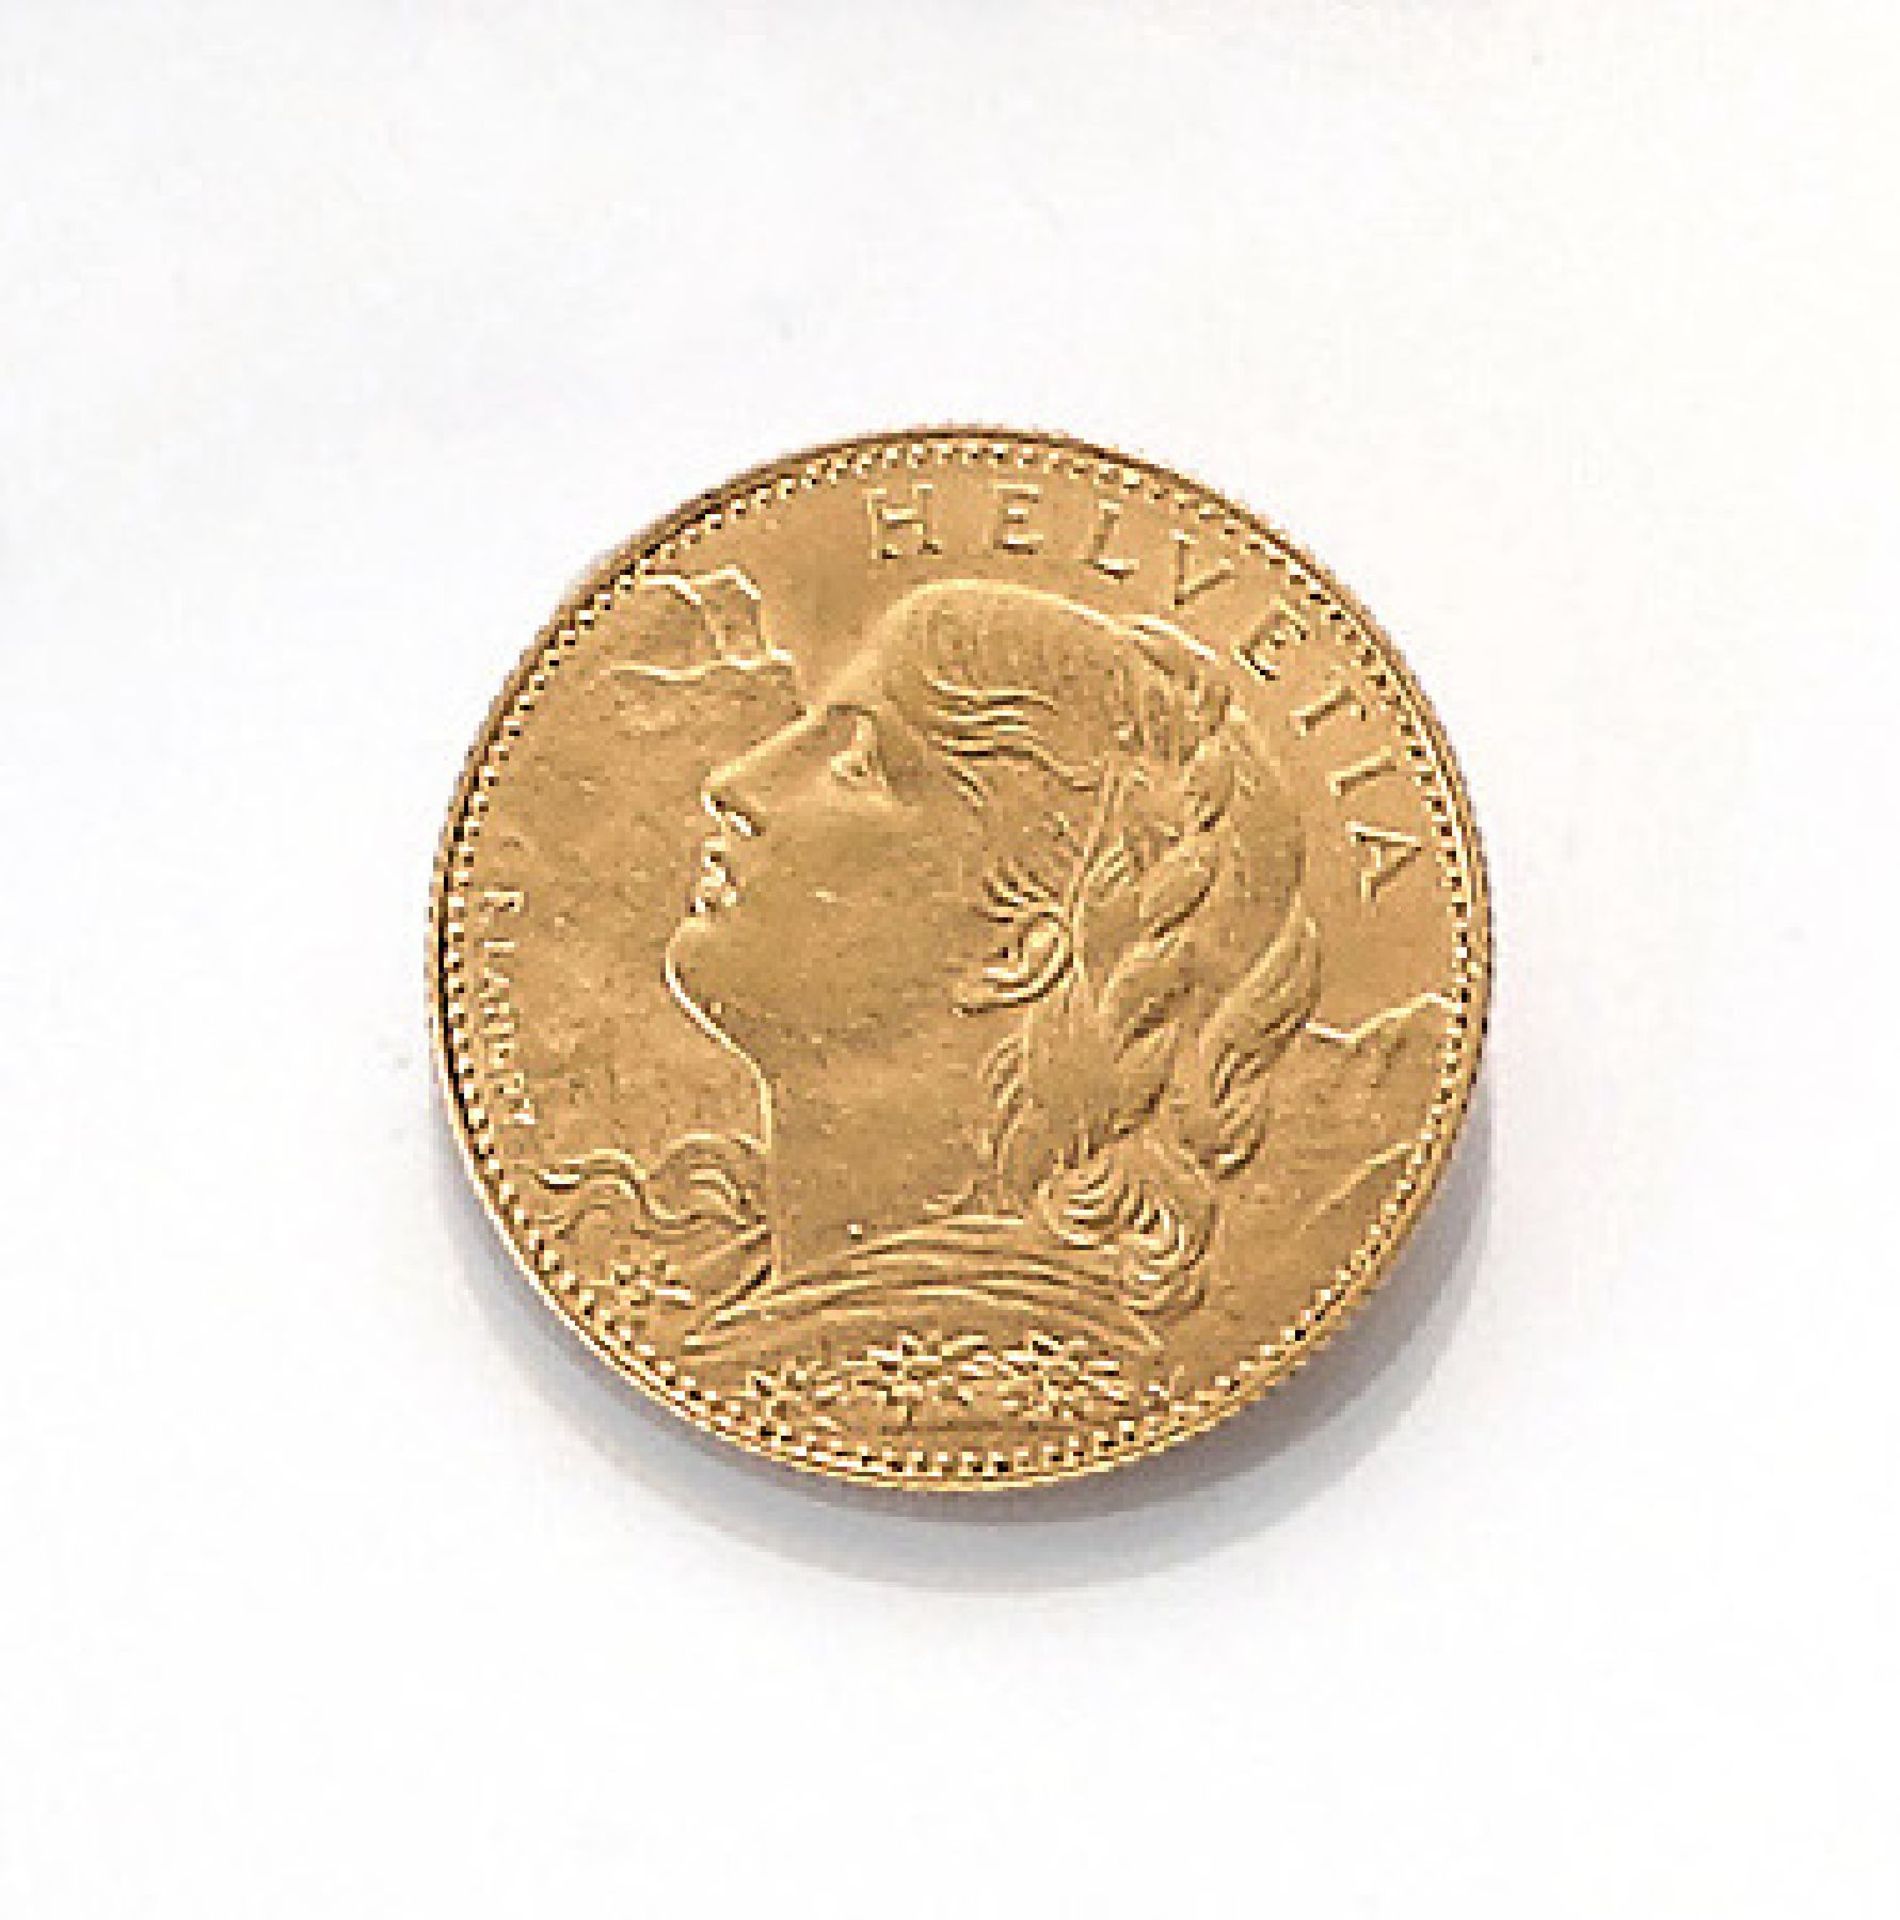 Goldmünze, 10 Franken, Schweiz, 1912, Helvetia, sogn. Vreneli, Prägemarke BGold coin, 10 Swiss